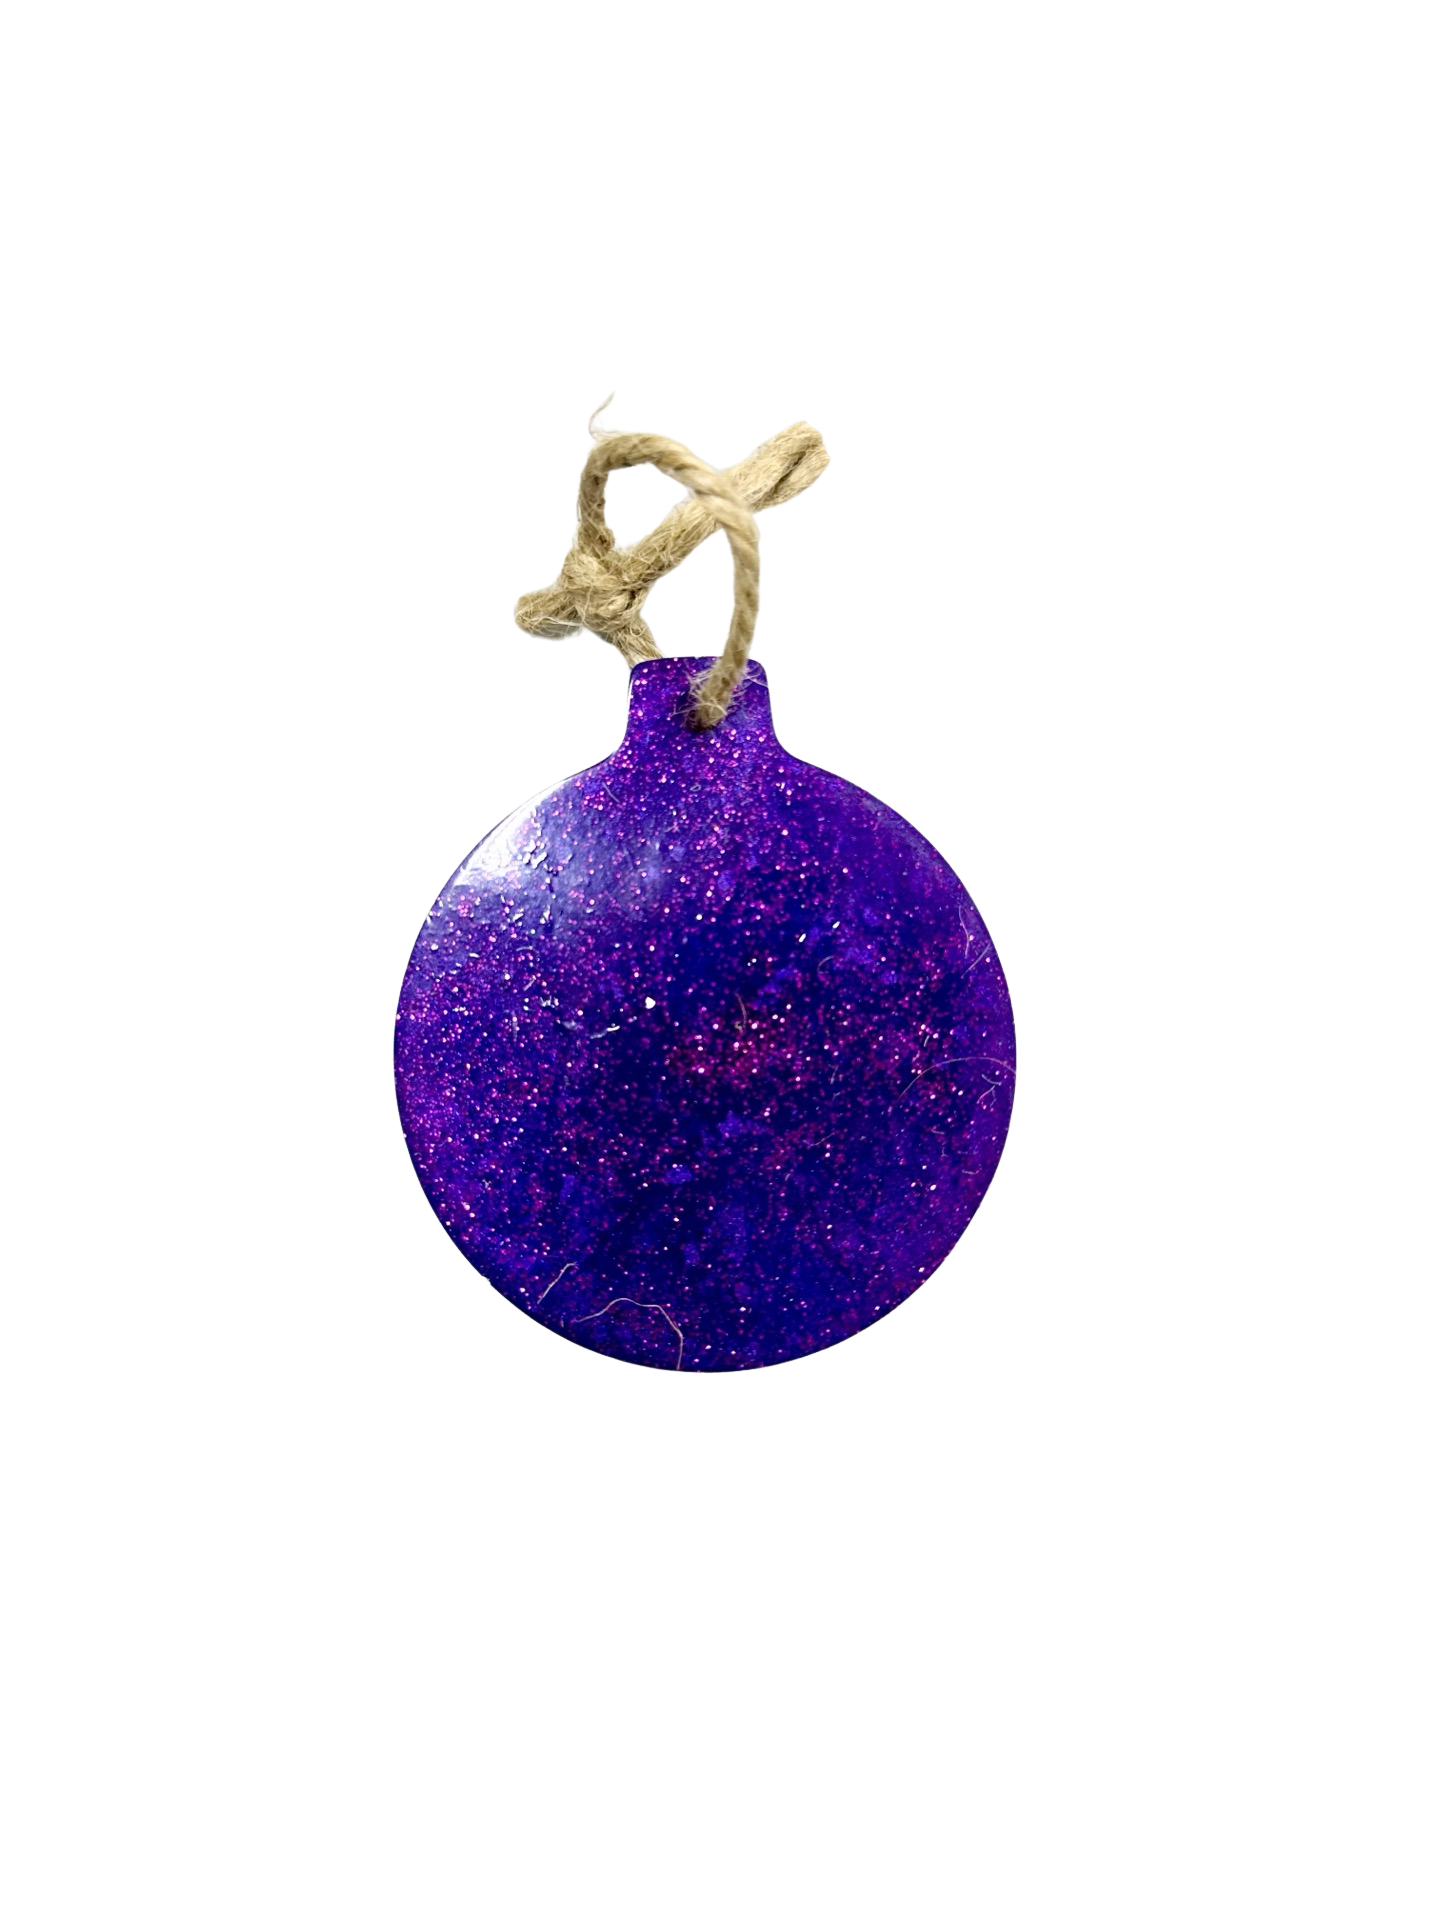 Purple Christmas Ornament